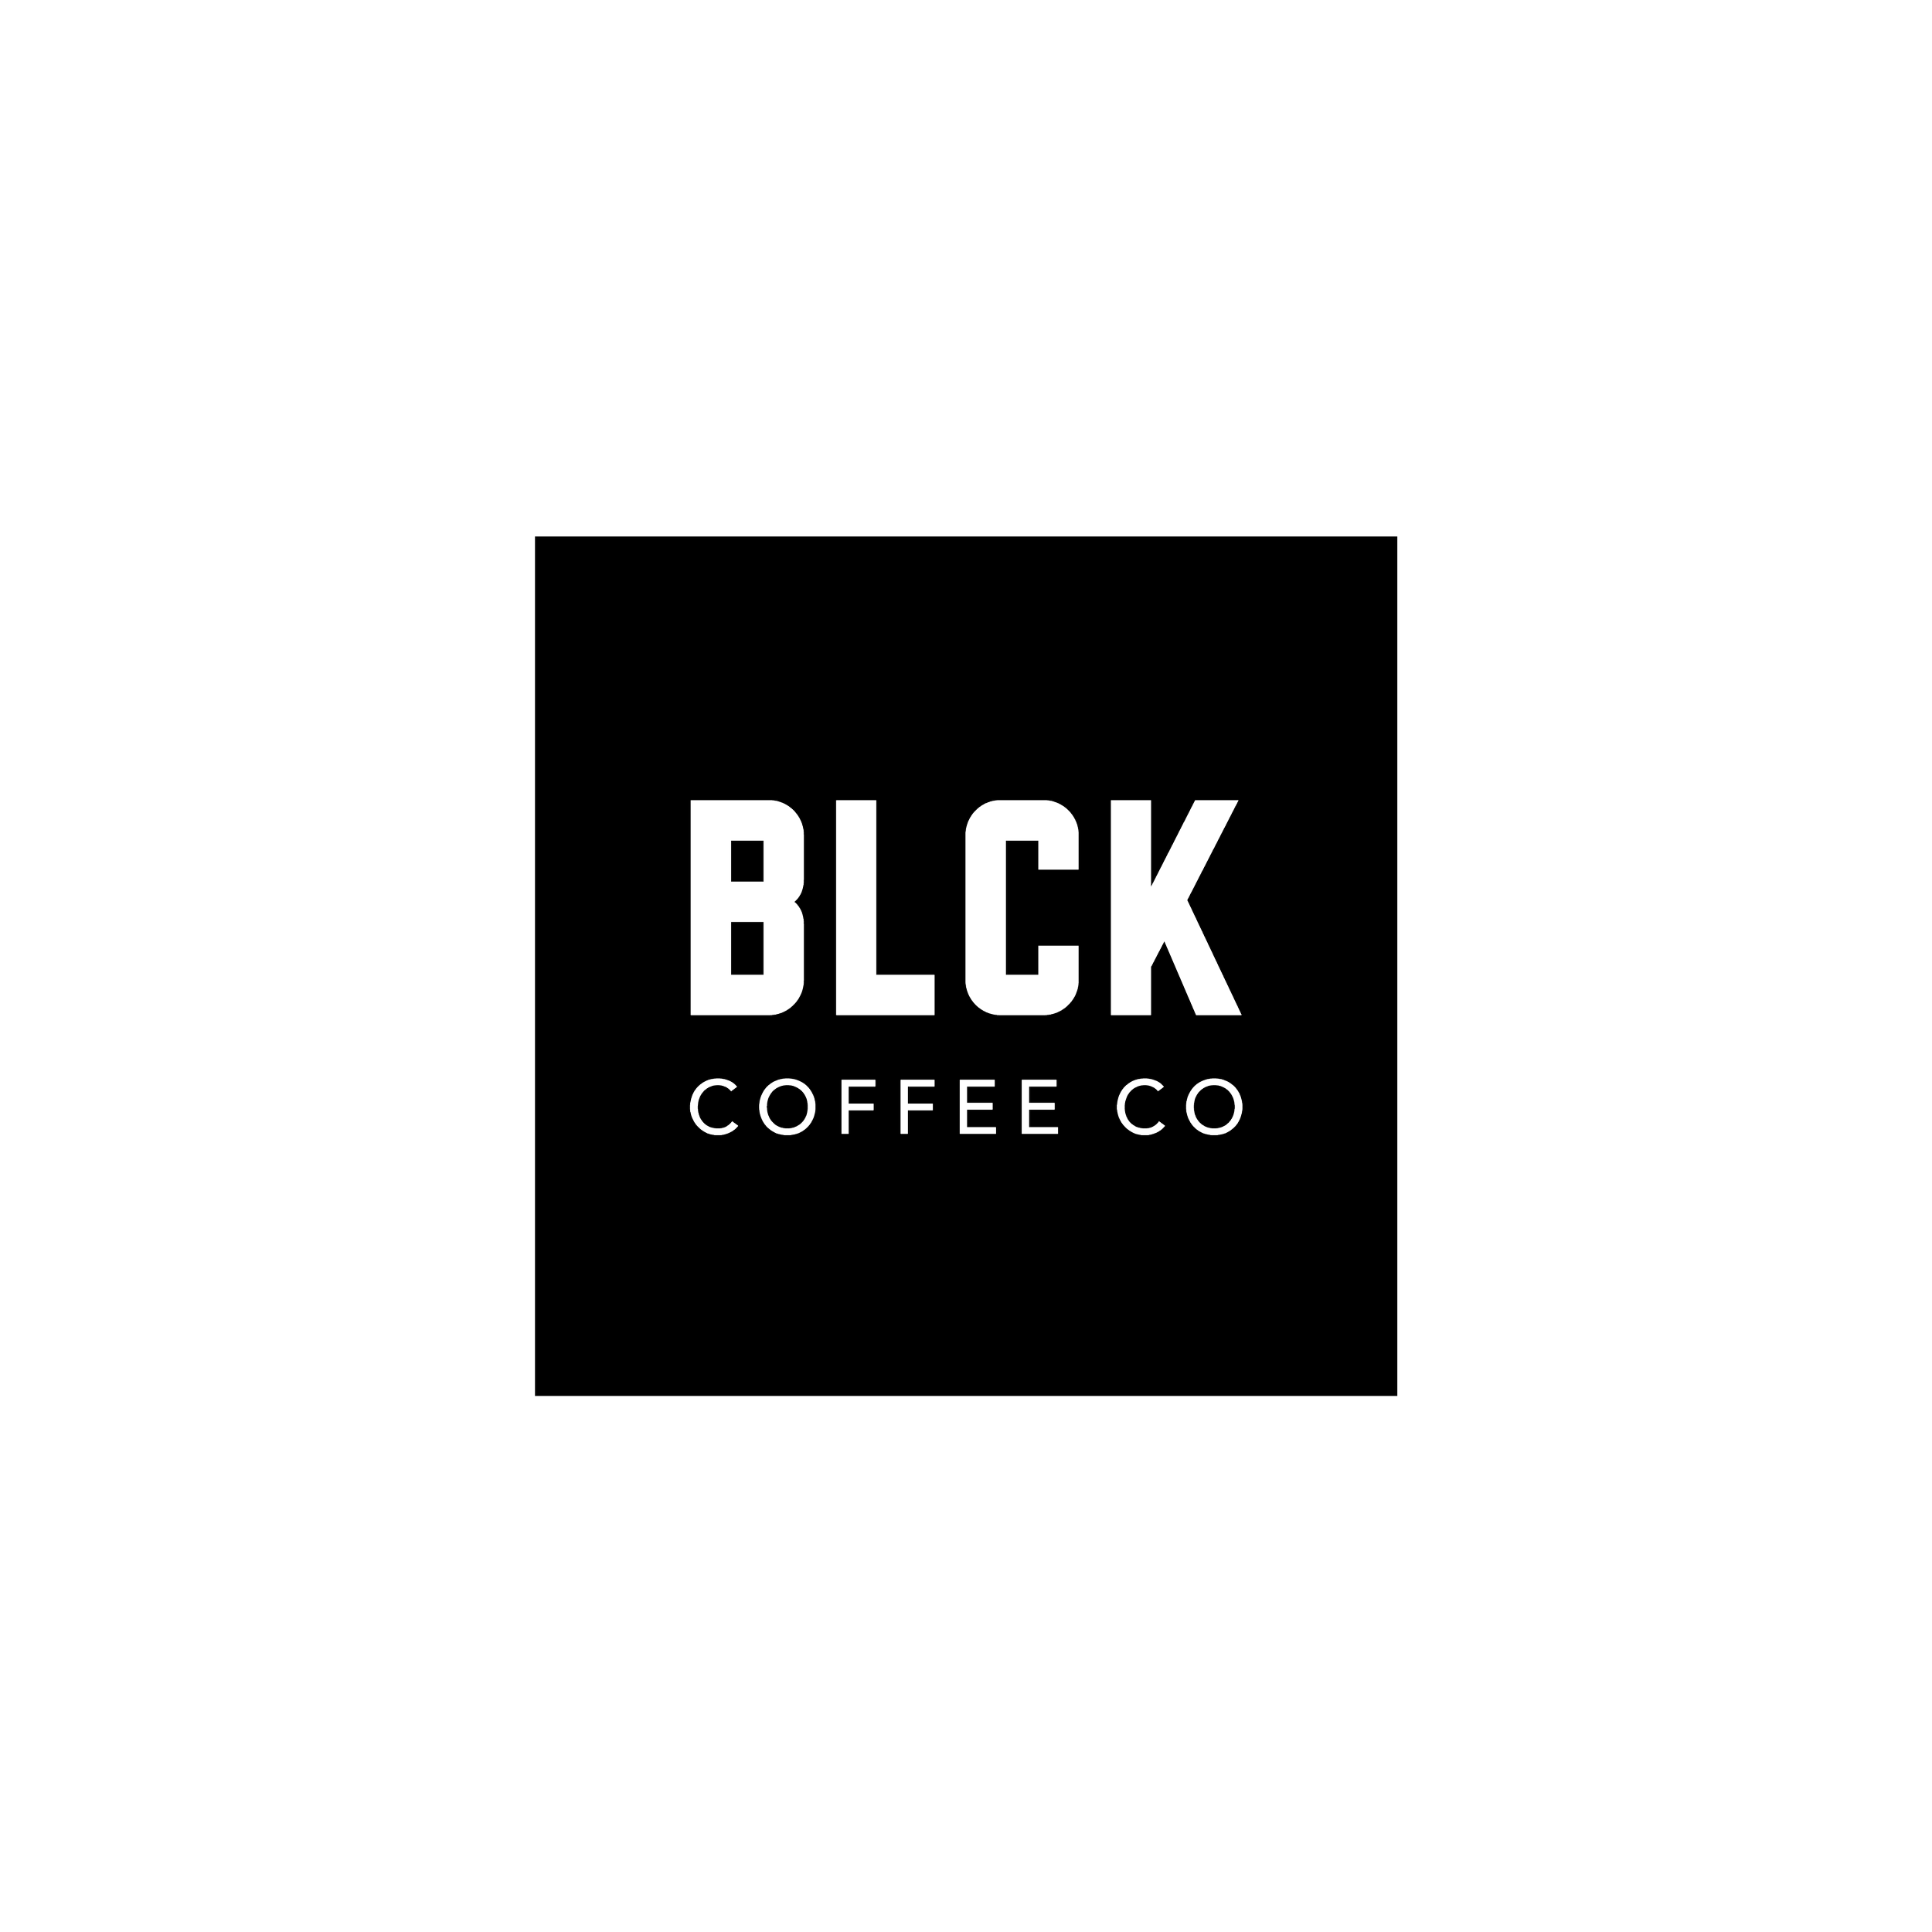 BLCK Coffee Co